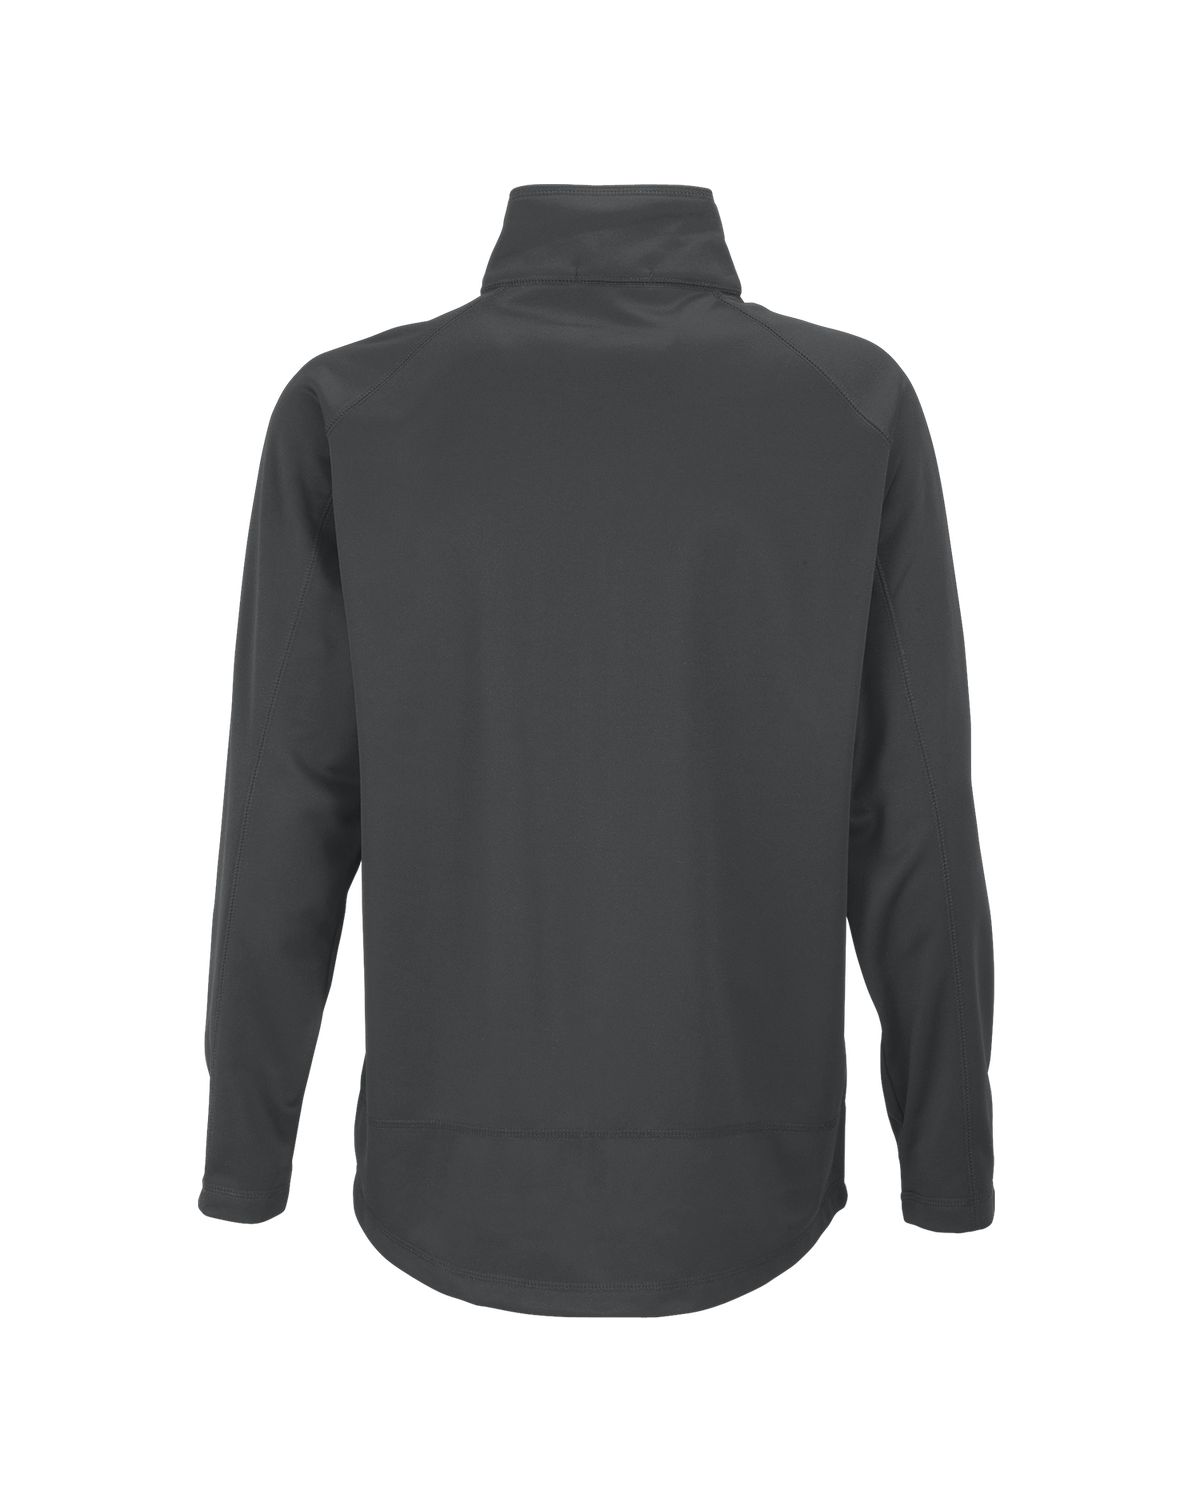 Vantage 3275 - Brushed Back Micro-Fleece Full-Zip Jacket $37.68